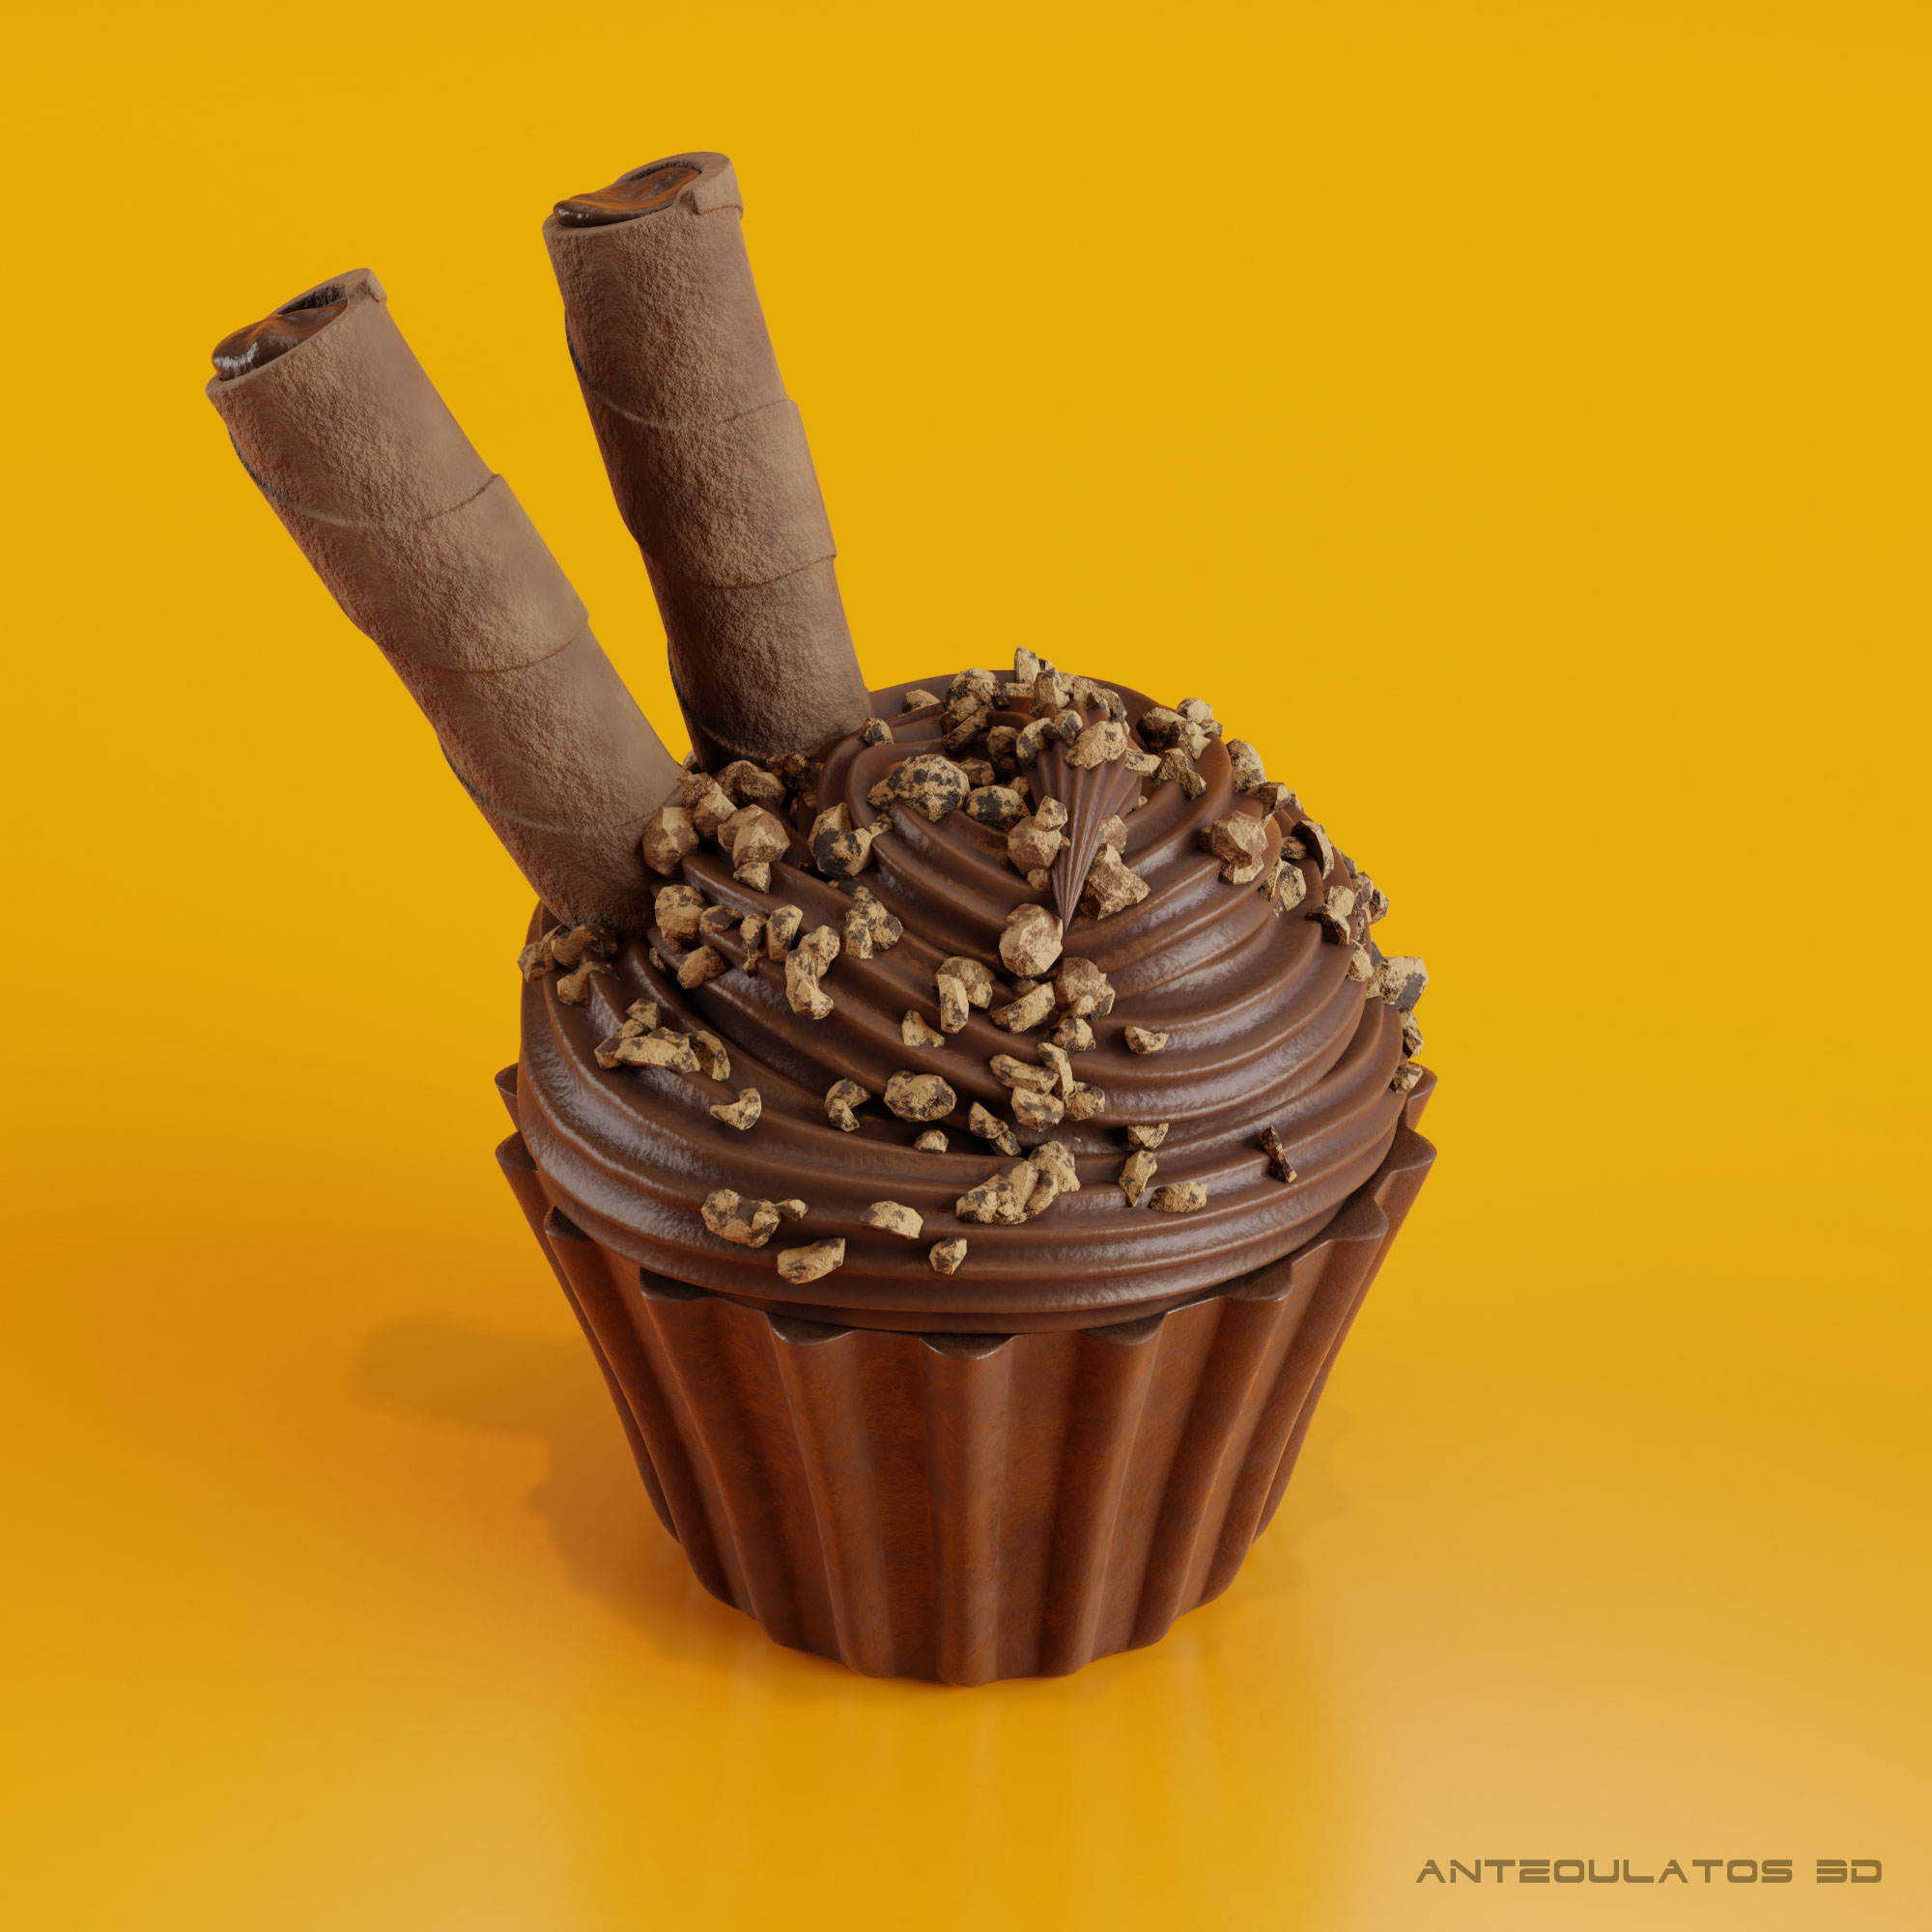 Cupcake - Chocolate mousse